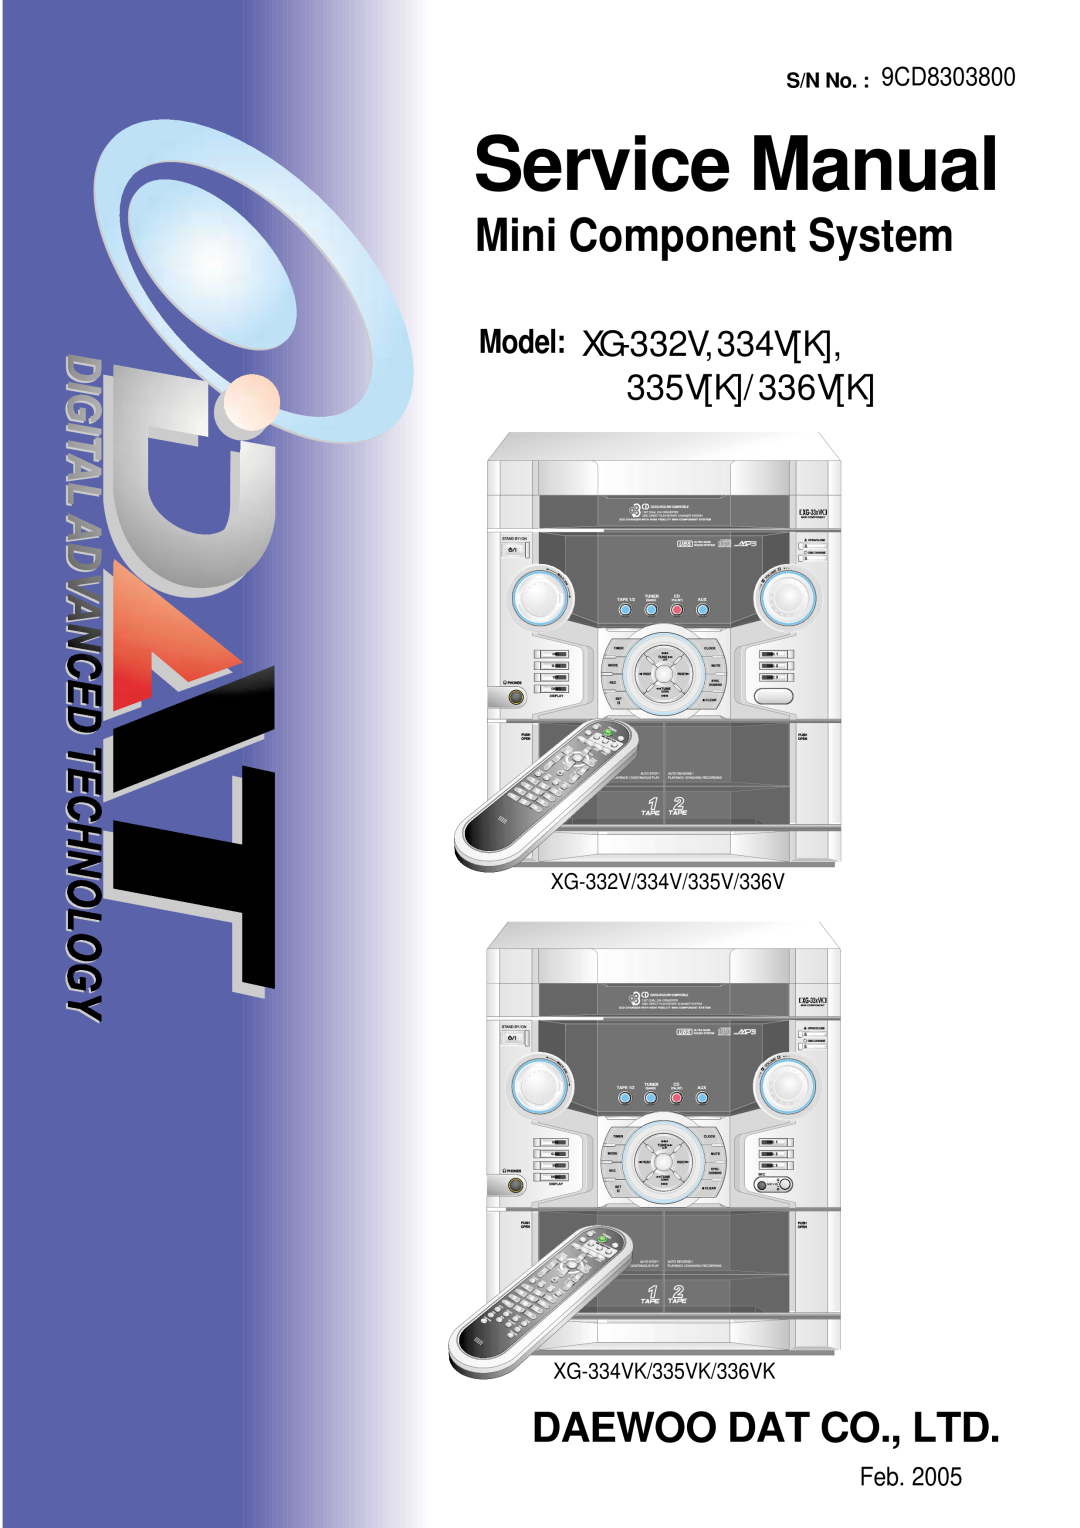 Daewoo XG332V service manual Mini Component System, Model XG-332V,334VK, 335VK/336VK, Feb, S/N No. 9CD8303800, 33xVK 